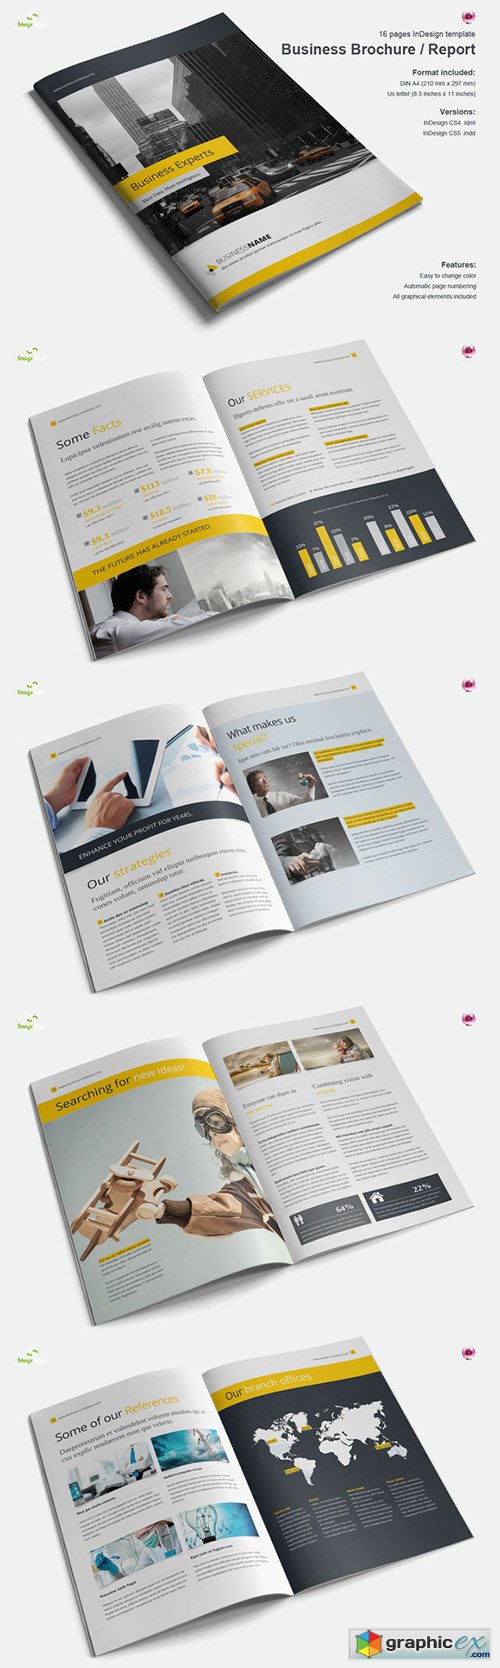  Business Brochure / Report Vol. 2 